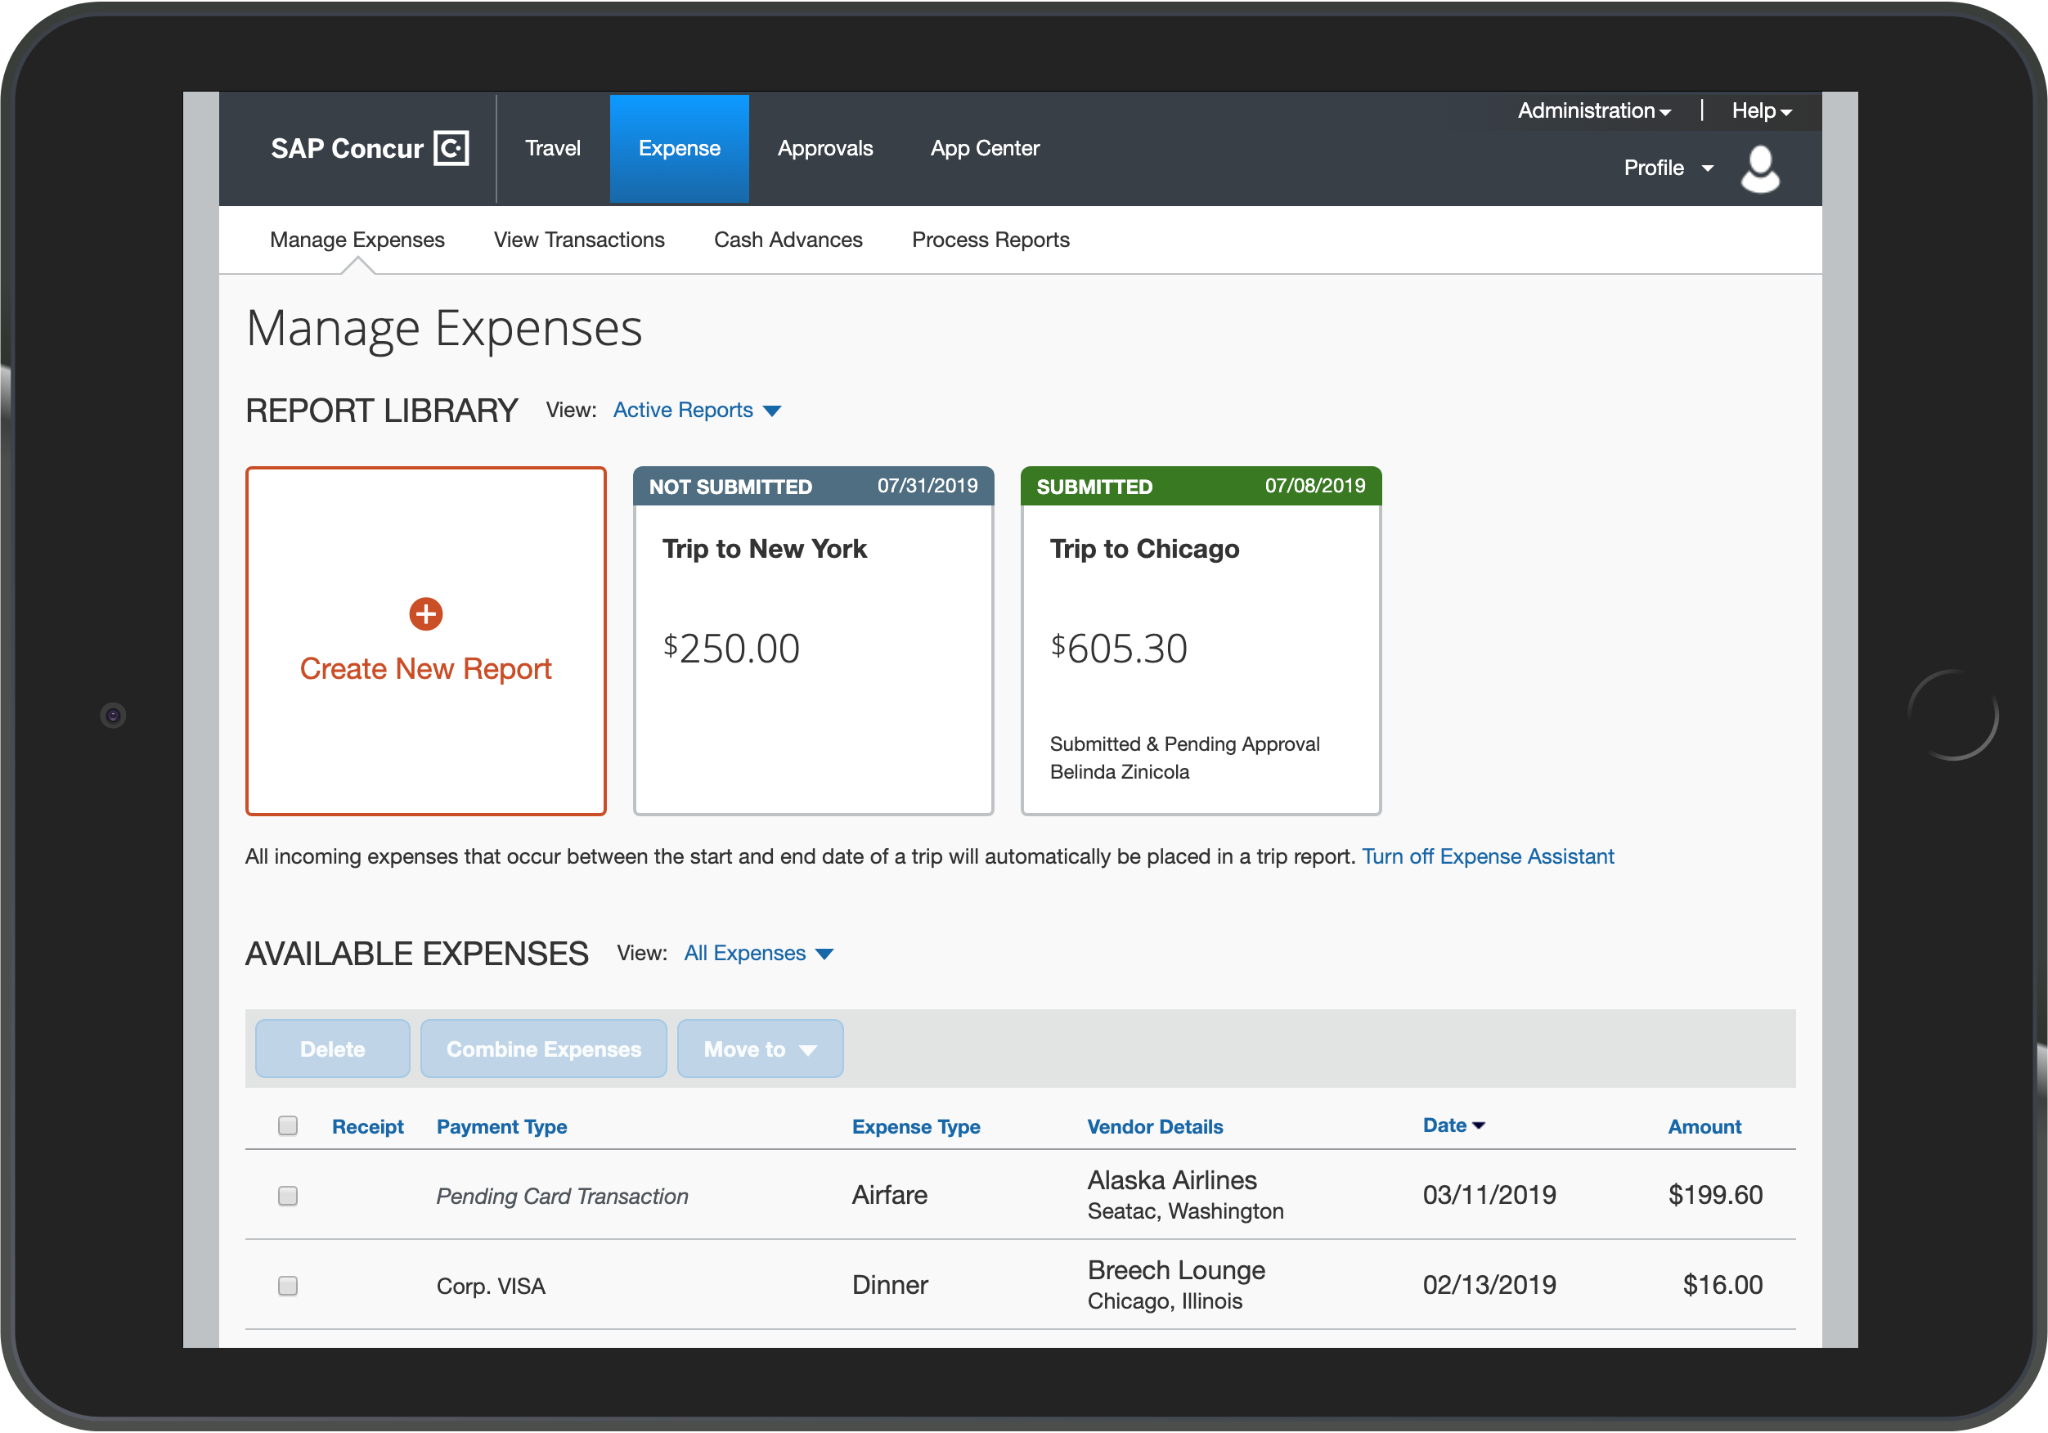 Managing travel expenses with SAP Concur